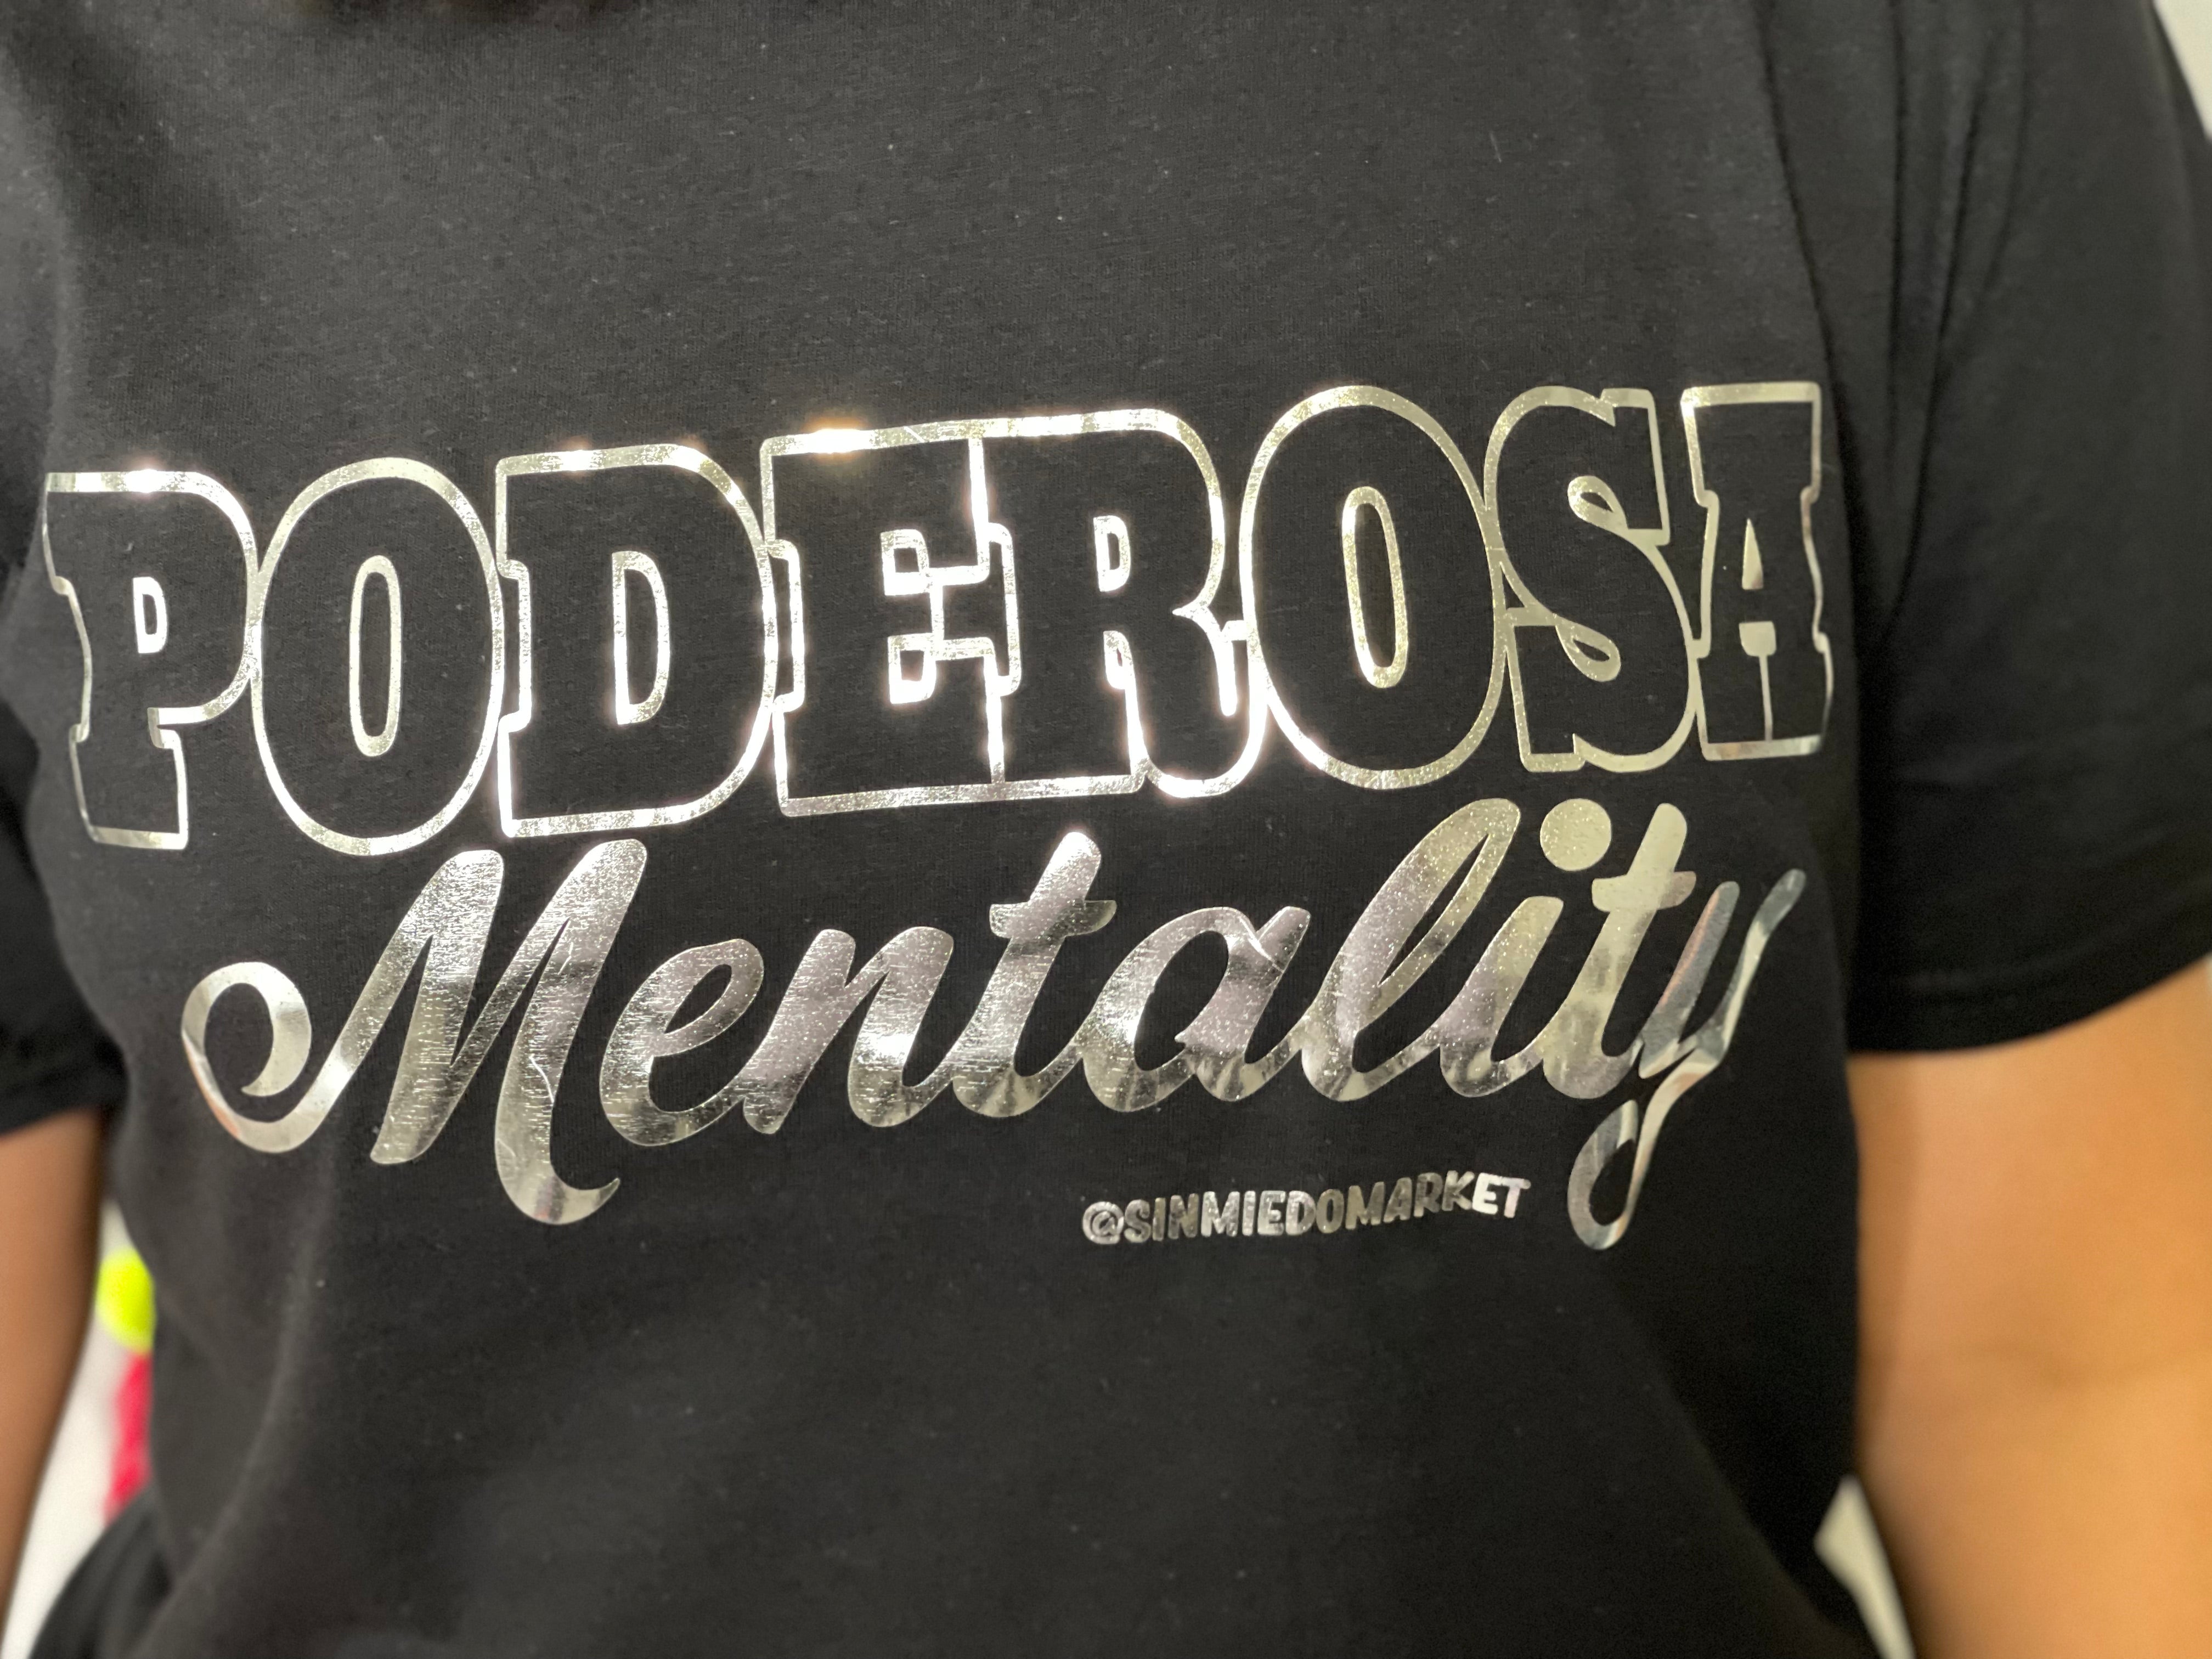 Poderosa Mentality T-Shirt